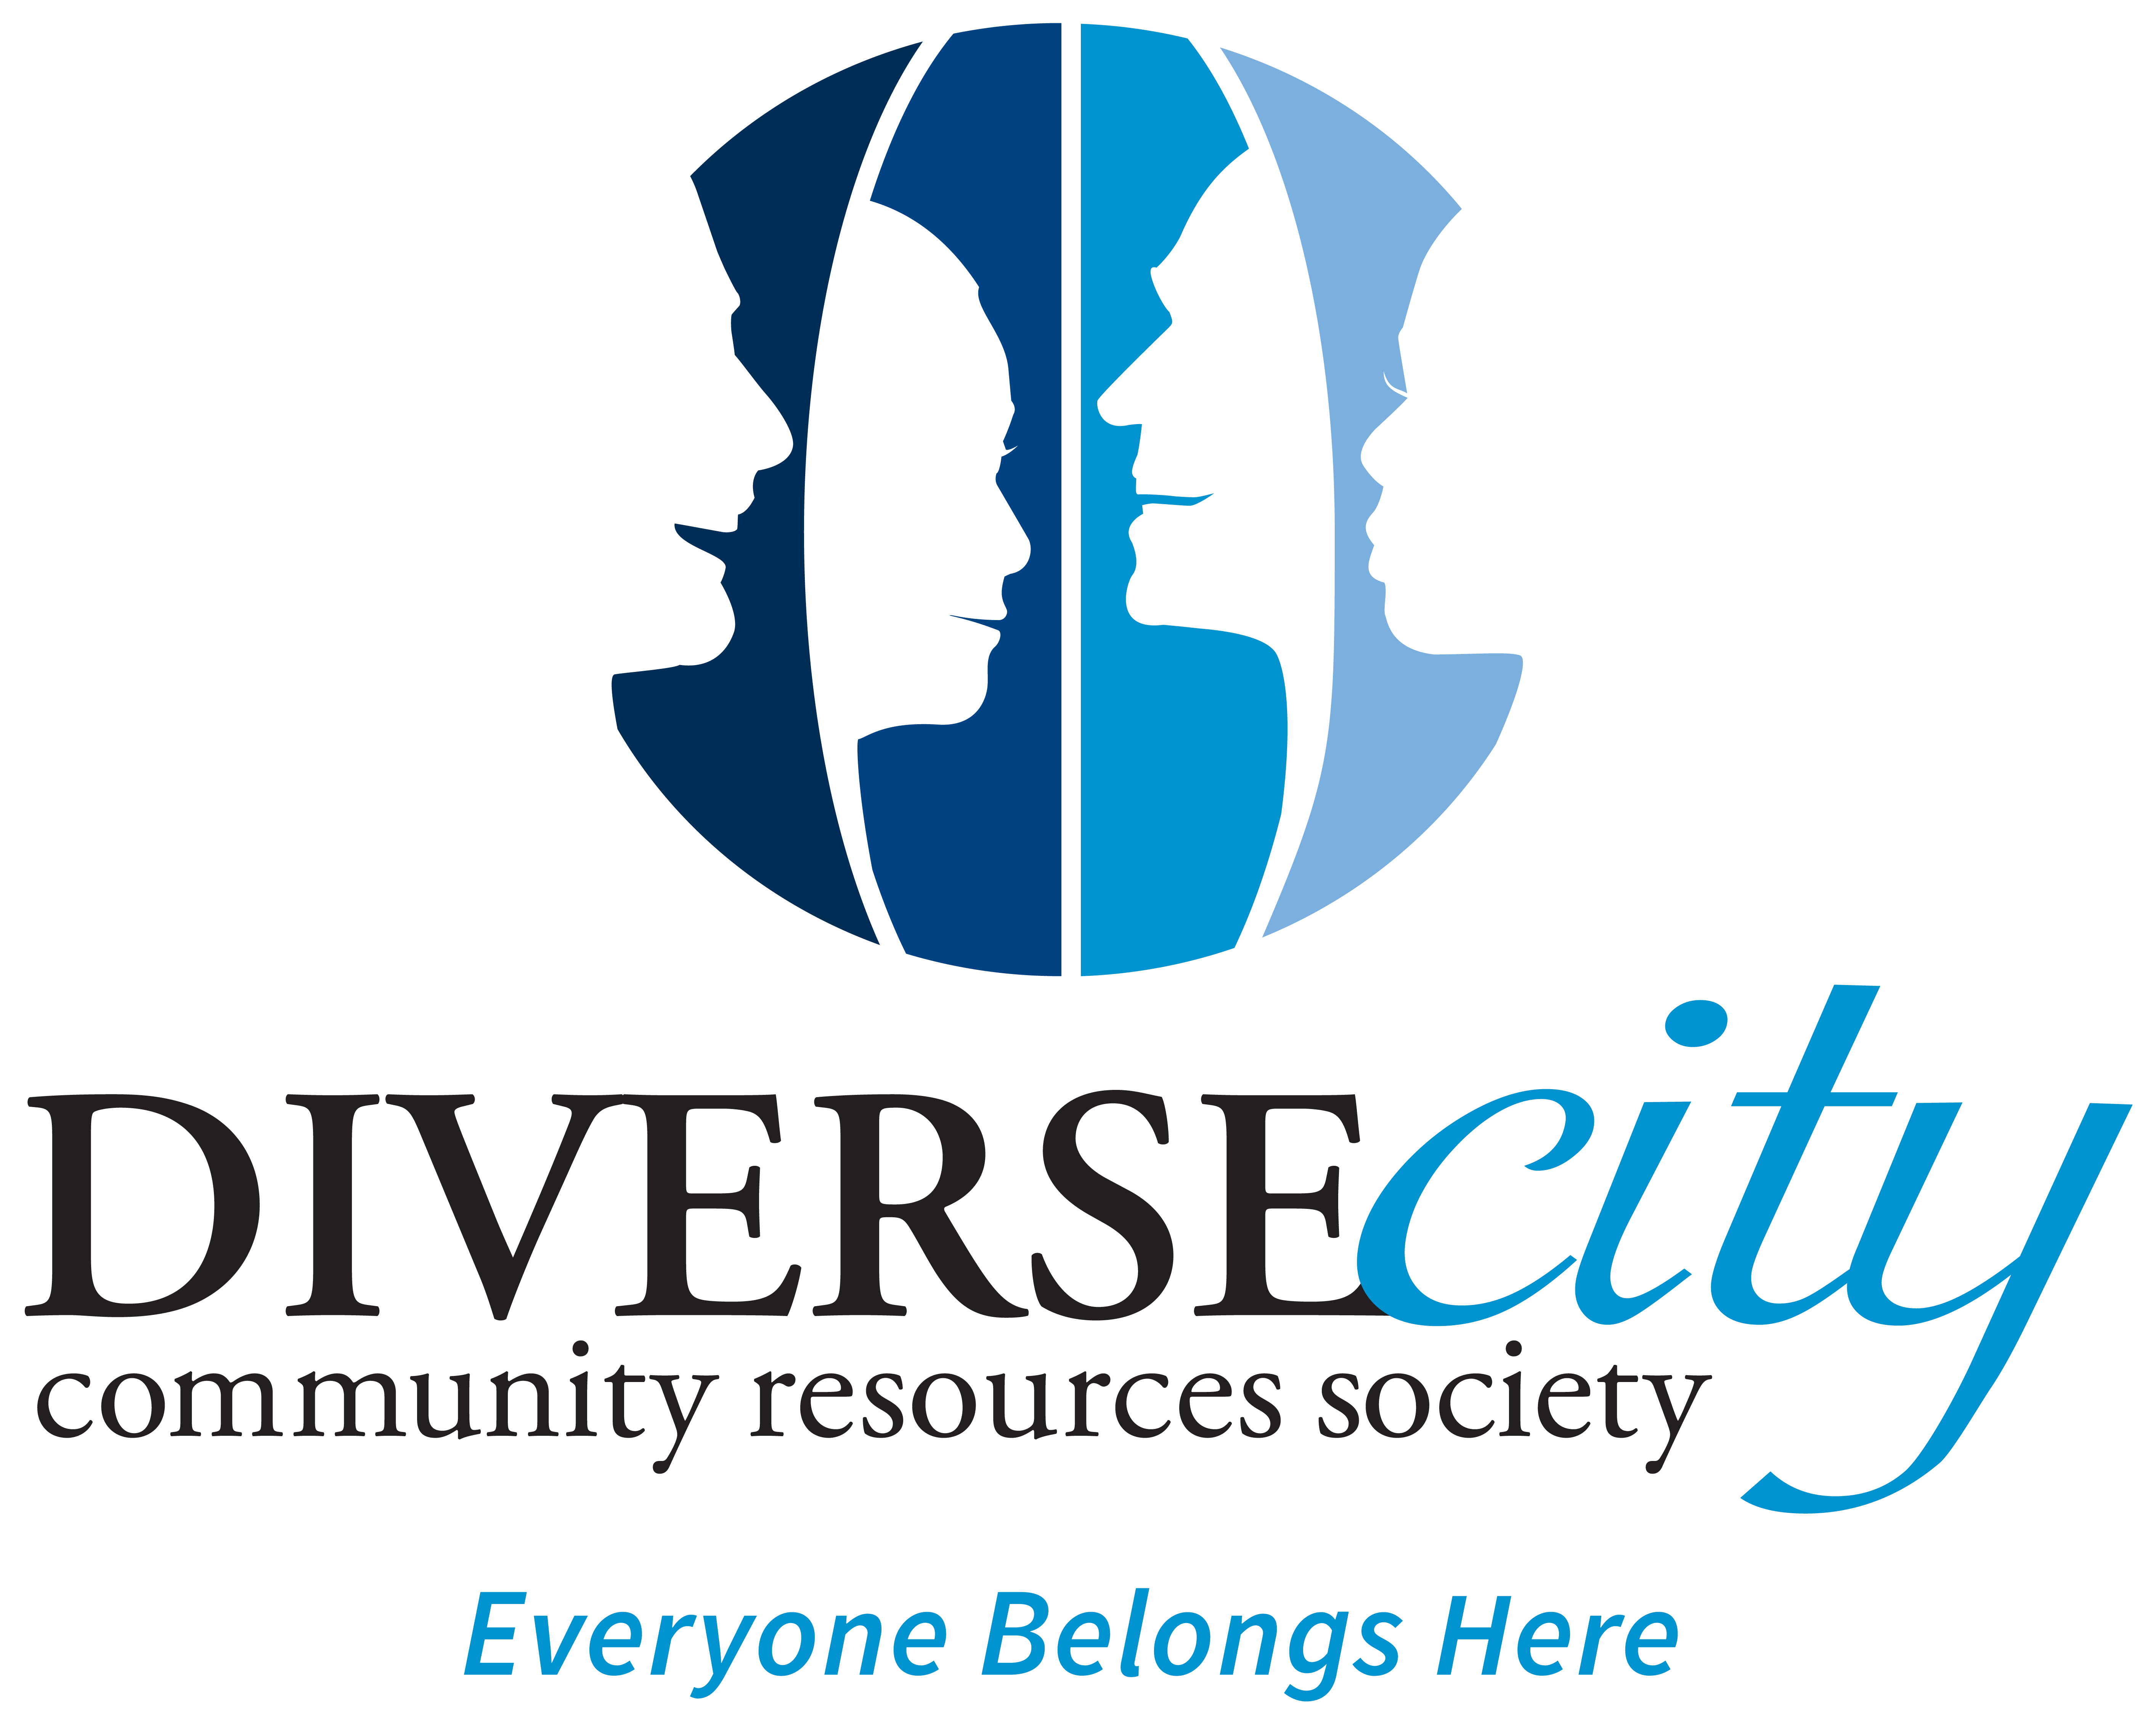 Diversecities Community Service Association